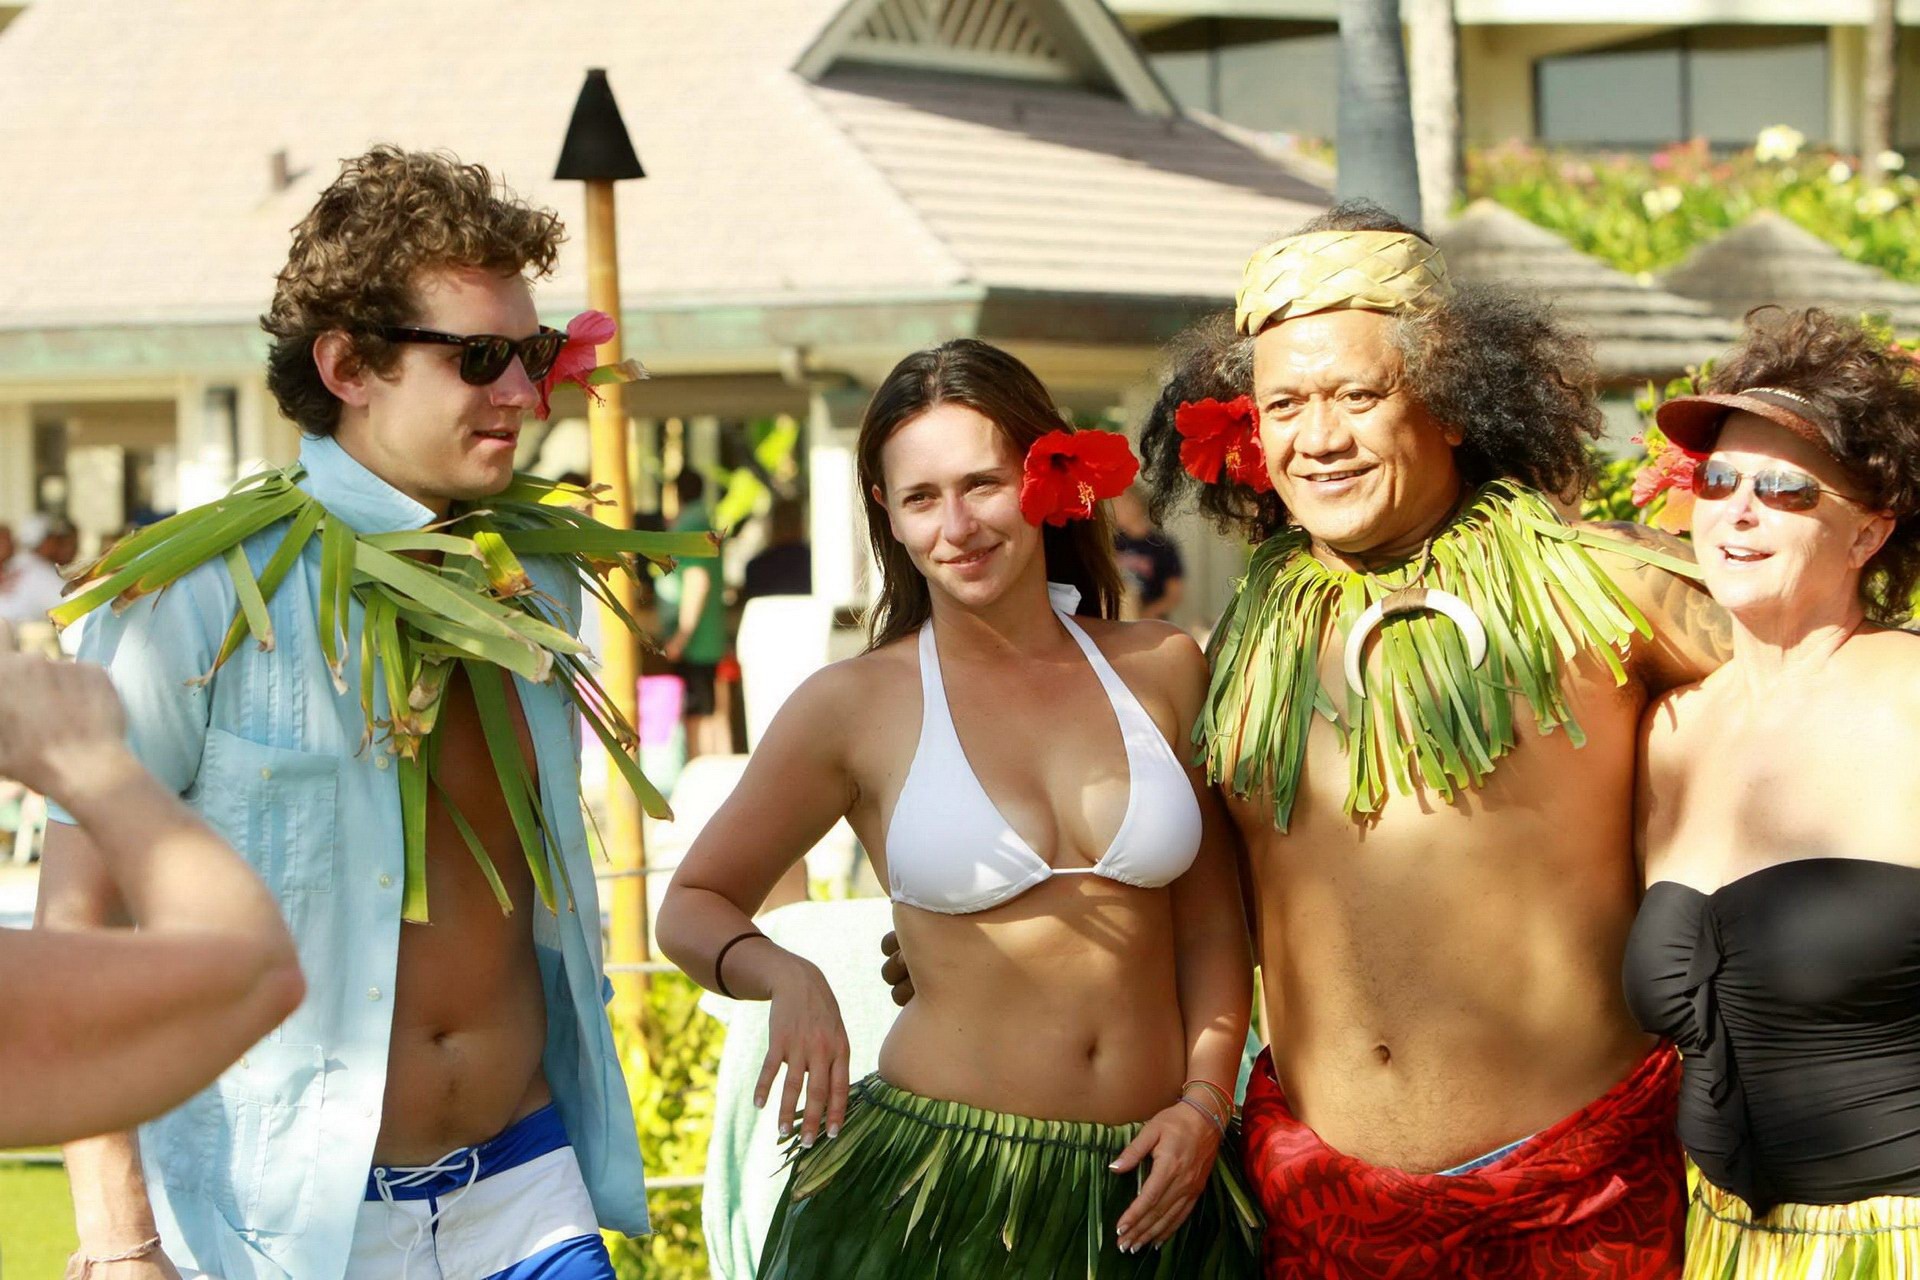 Jennifer amore hewitt busty indossando bikini top bianco gonna hula in maui
 #75321954